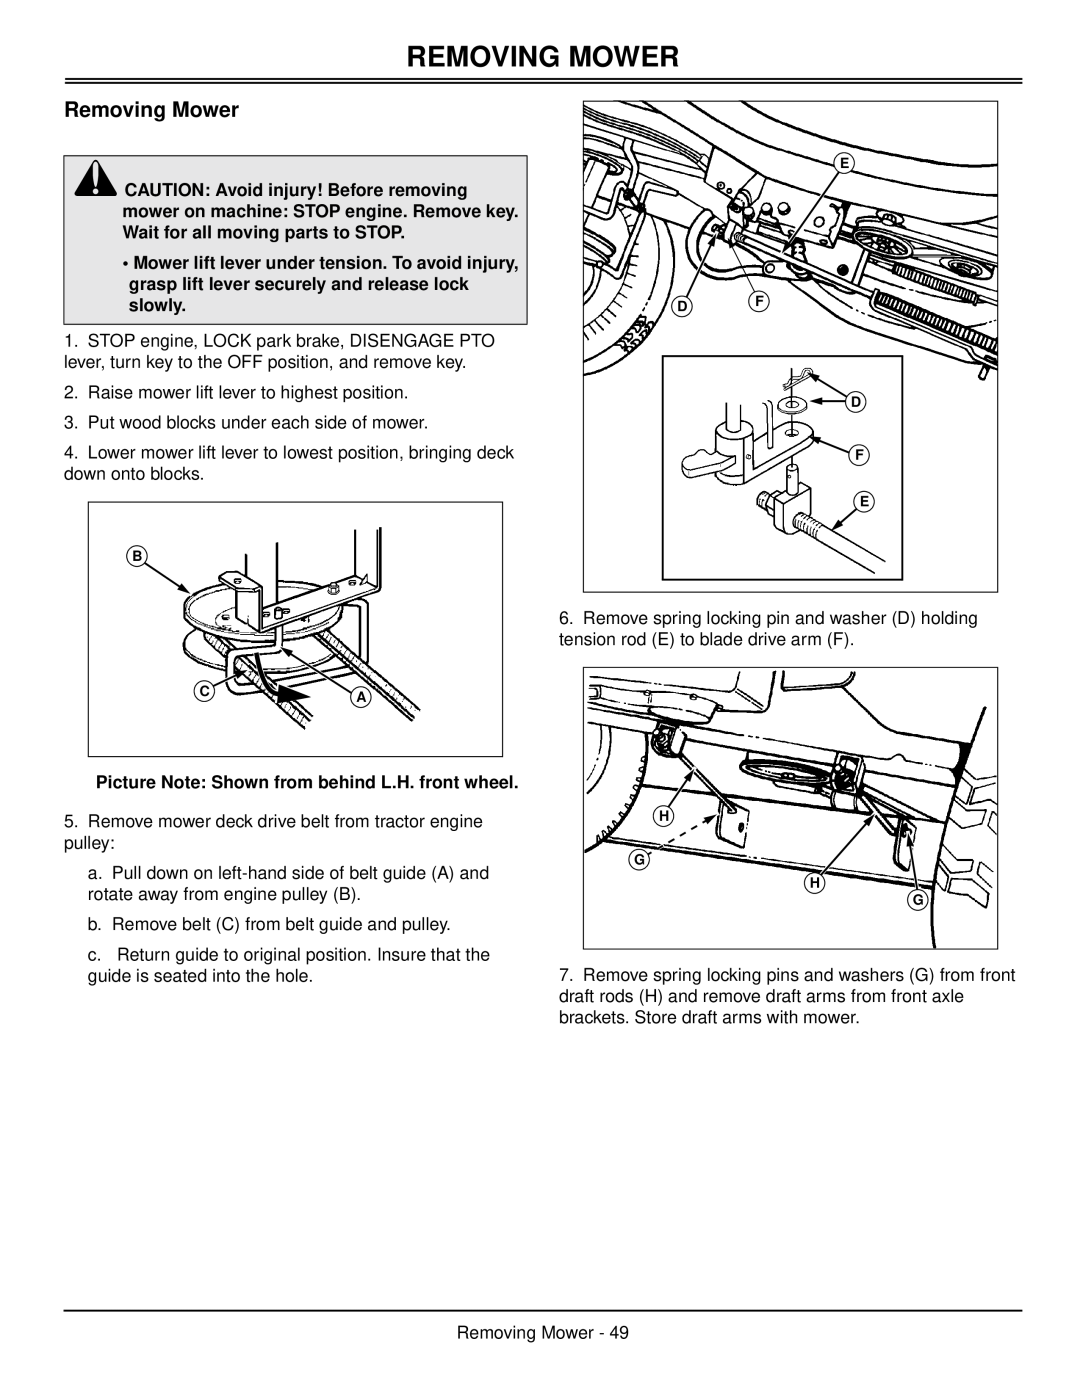 Scotts S1642, S1742, S2046 manual Removing Mower 